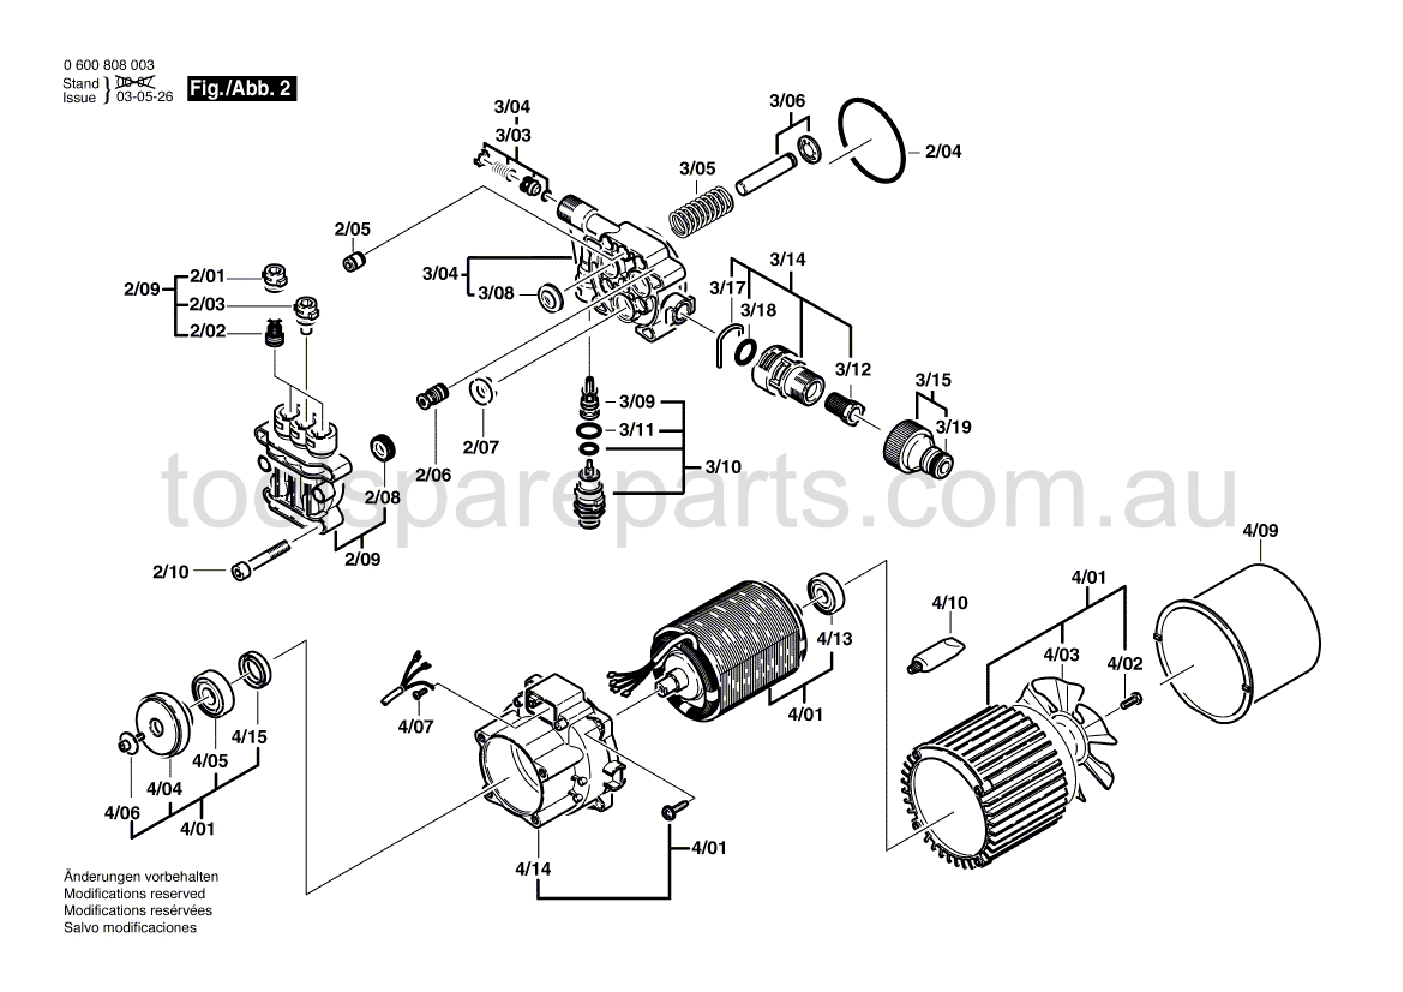 Bosch AHR 1200 AS 0600808037  Diagram 2